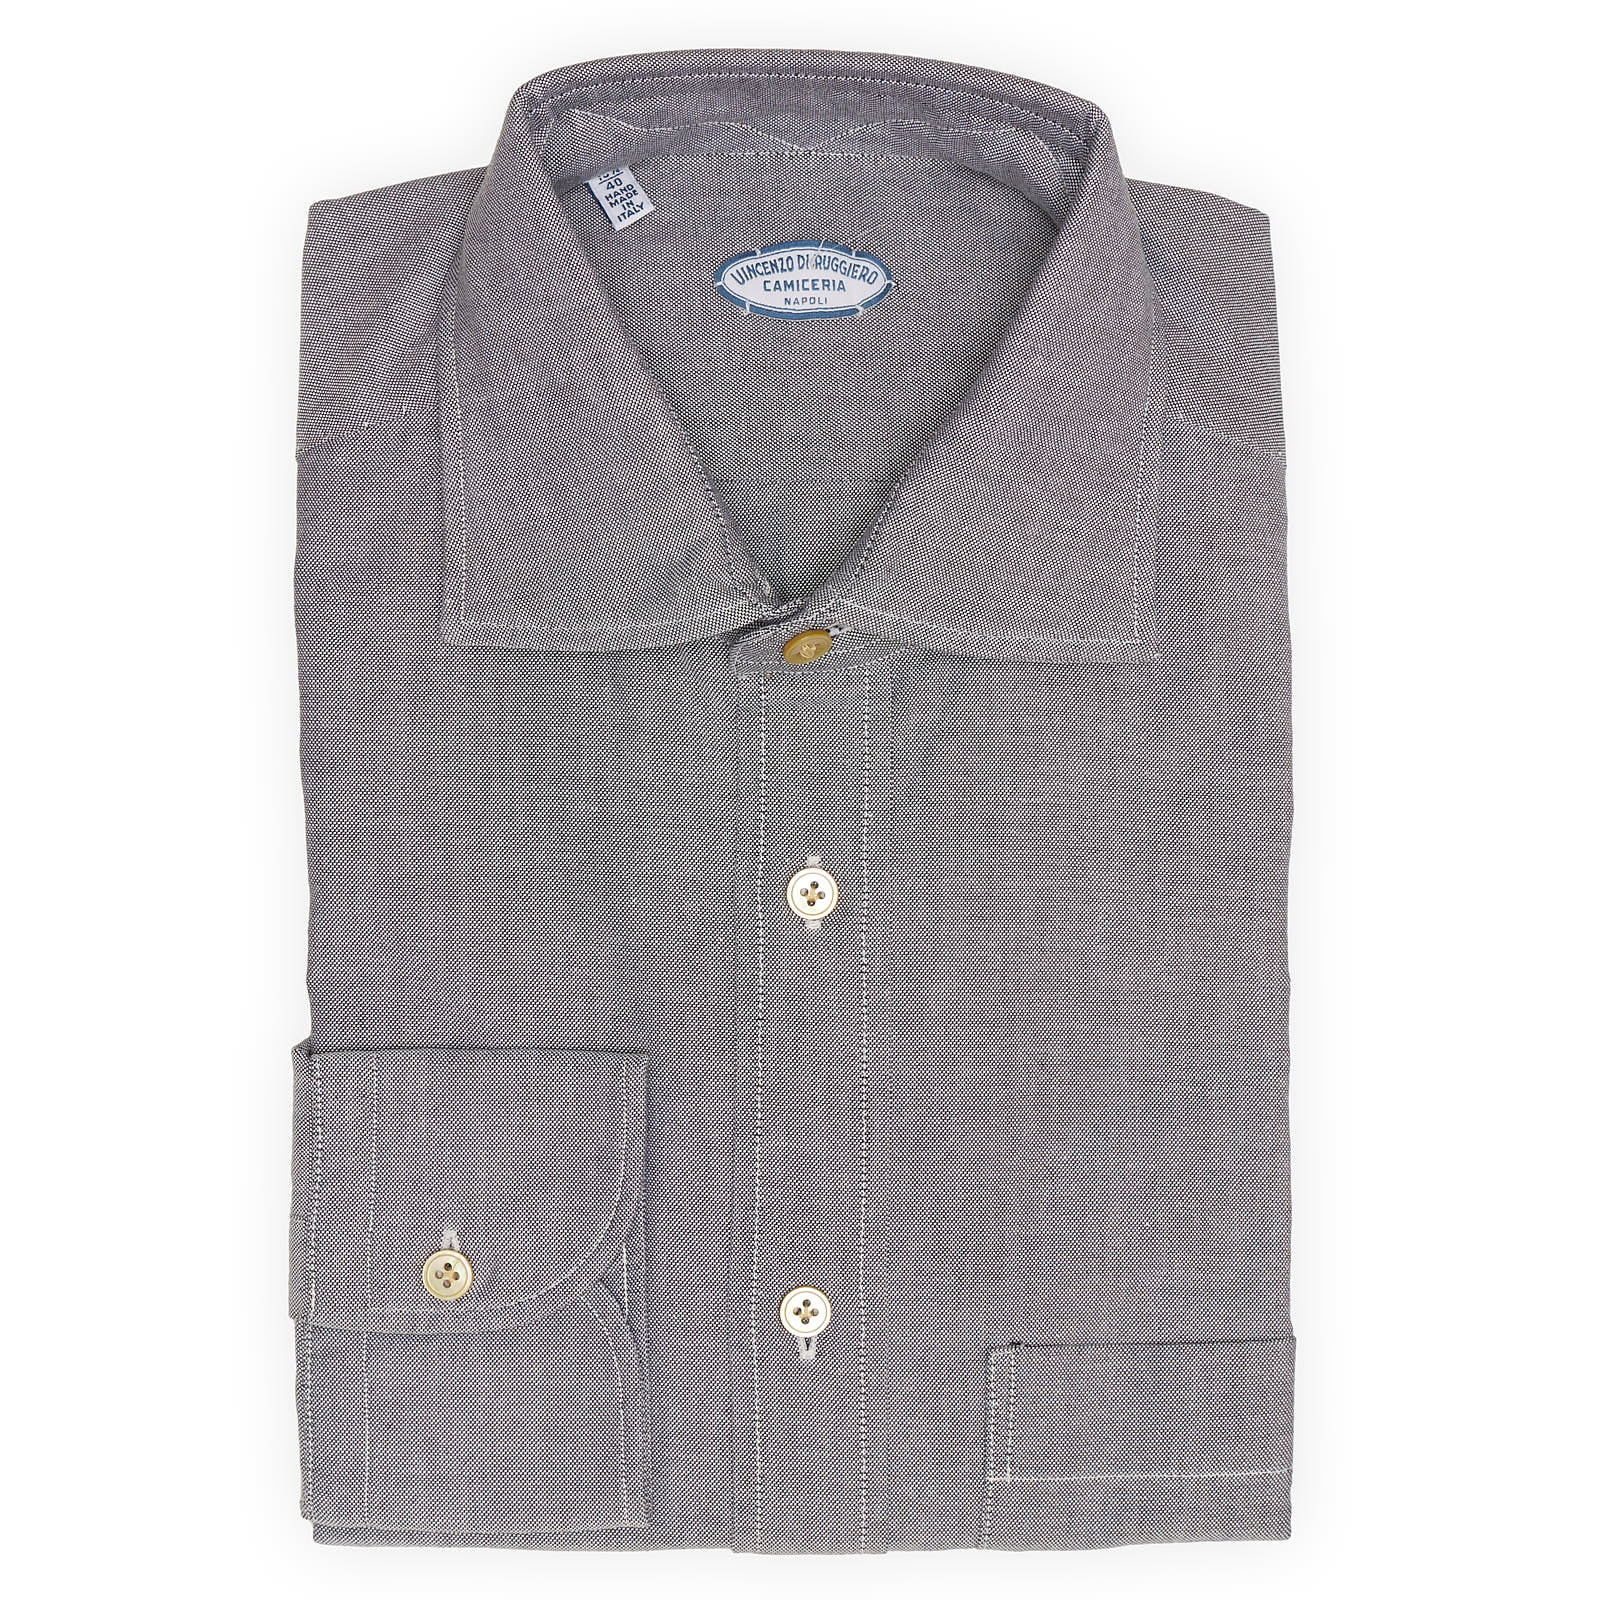 VINCENZO DI RUGGIERO Gray Oxford Cotton Dress Shirt Shirt EU 40 NEW US 15.75